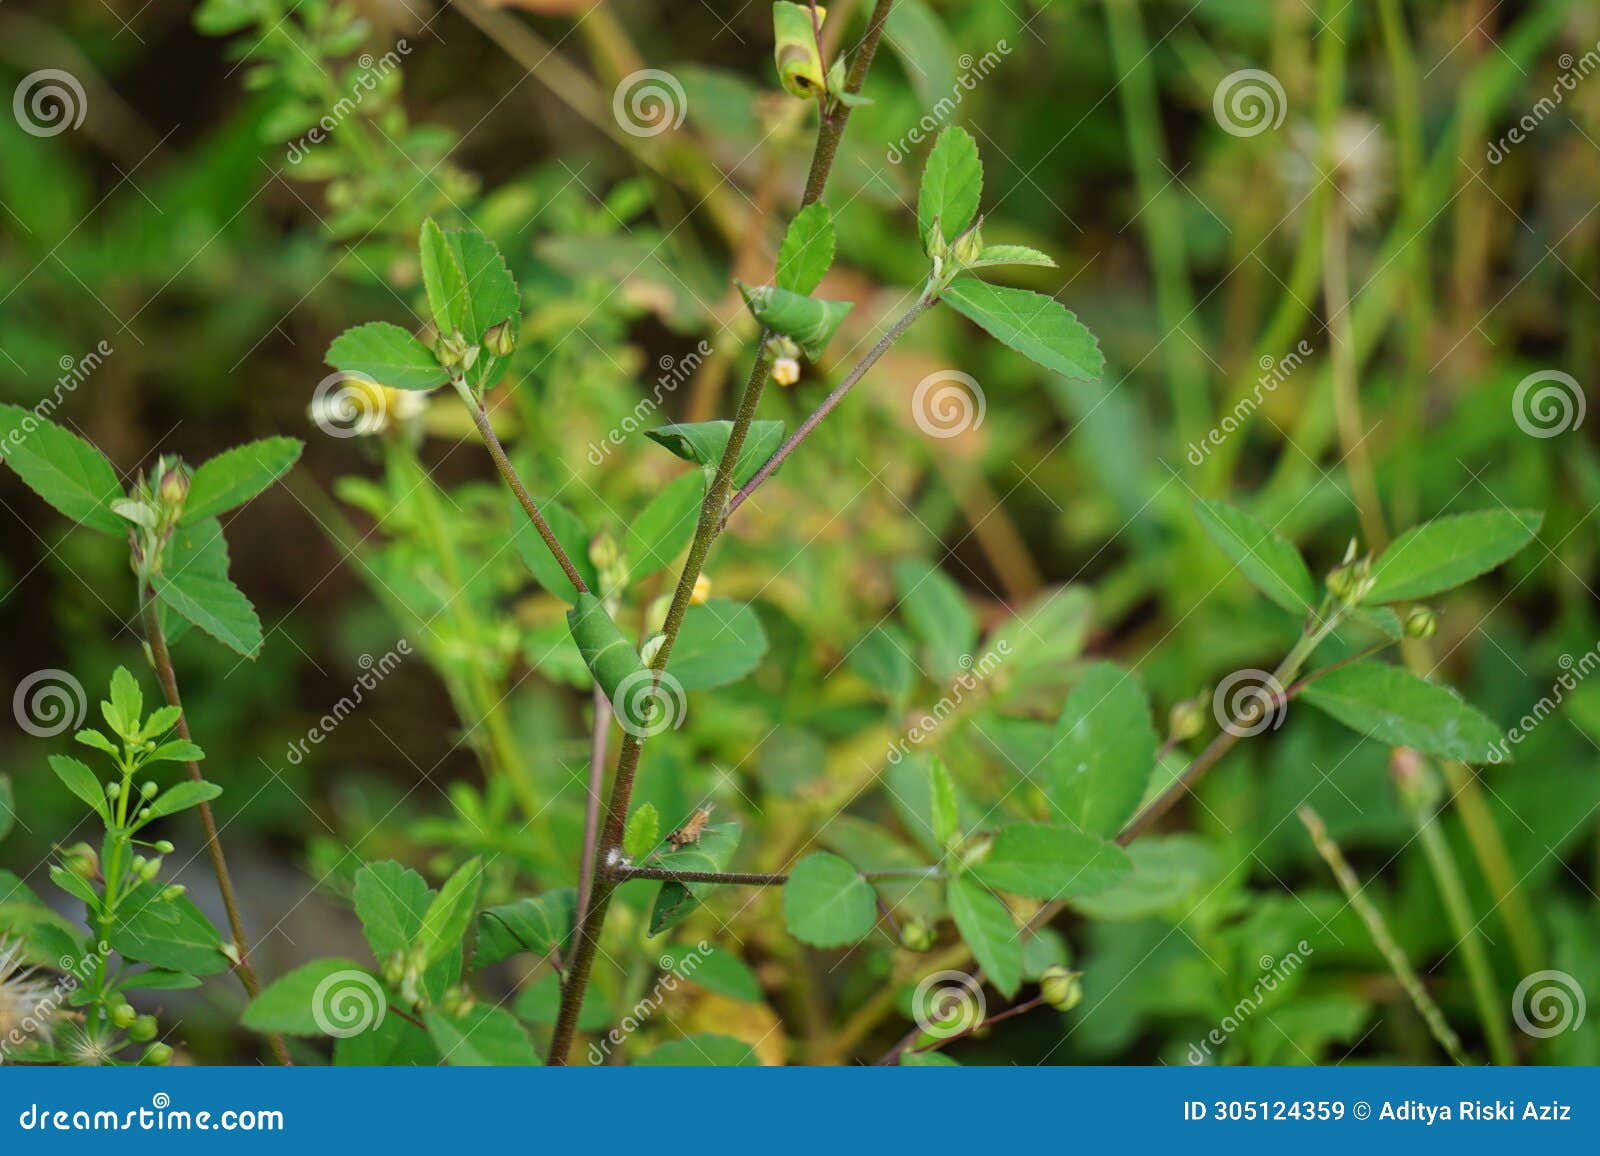 sida rhombifolia (arrowleaf sida, malva rhombifolia, rhombus-leaved sida, paddy's lucerne)